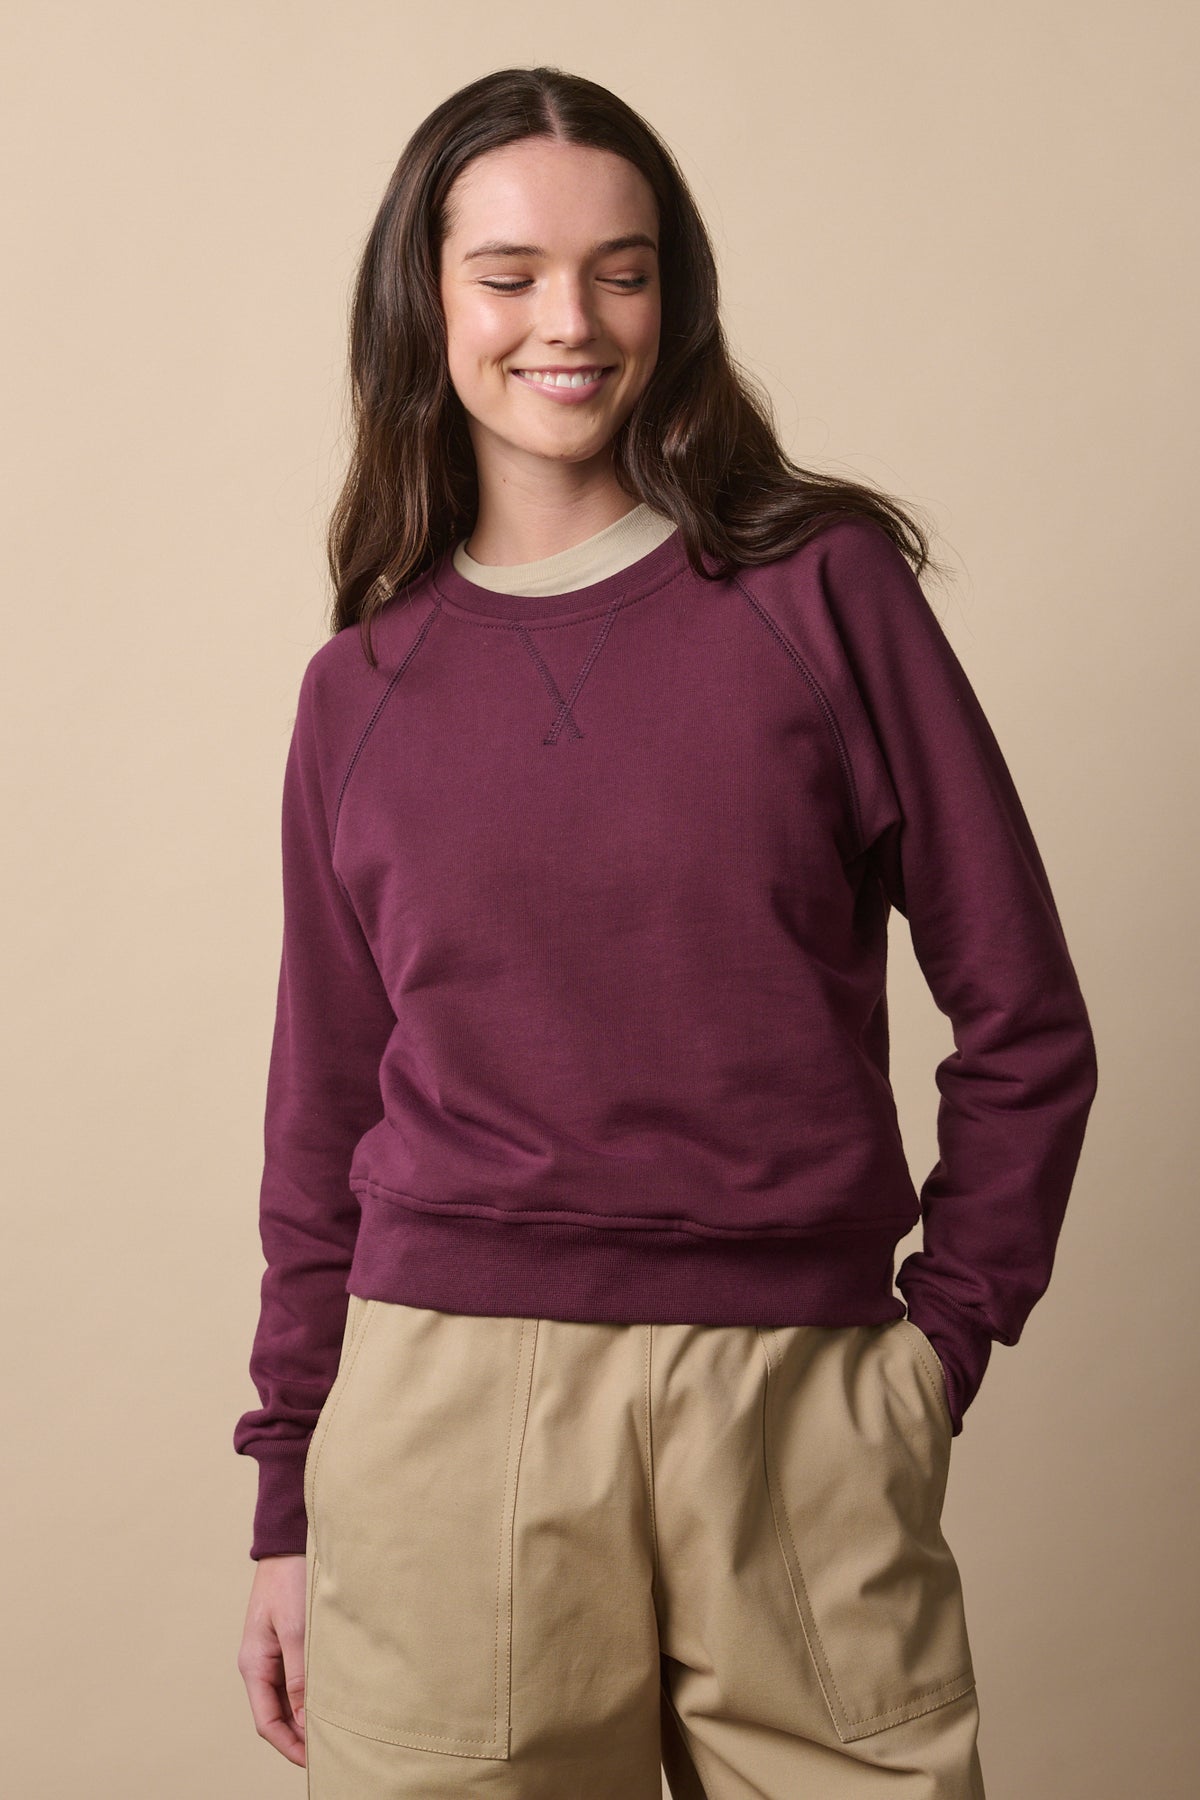 
            Thigh up of brunette female wearing raglan sweatshirt in plum 